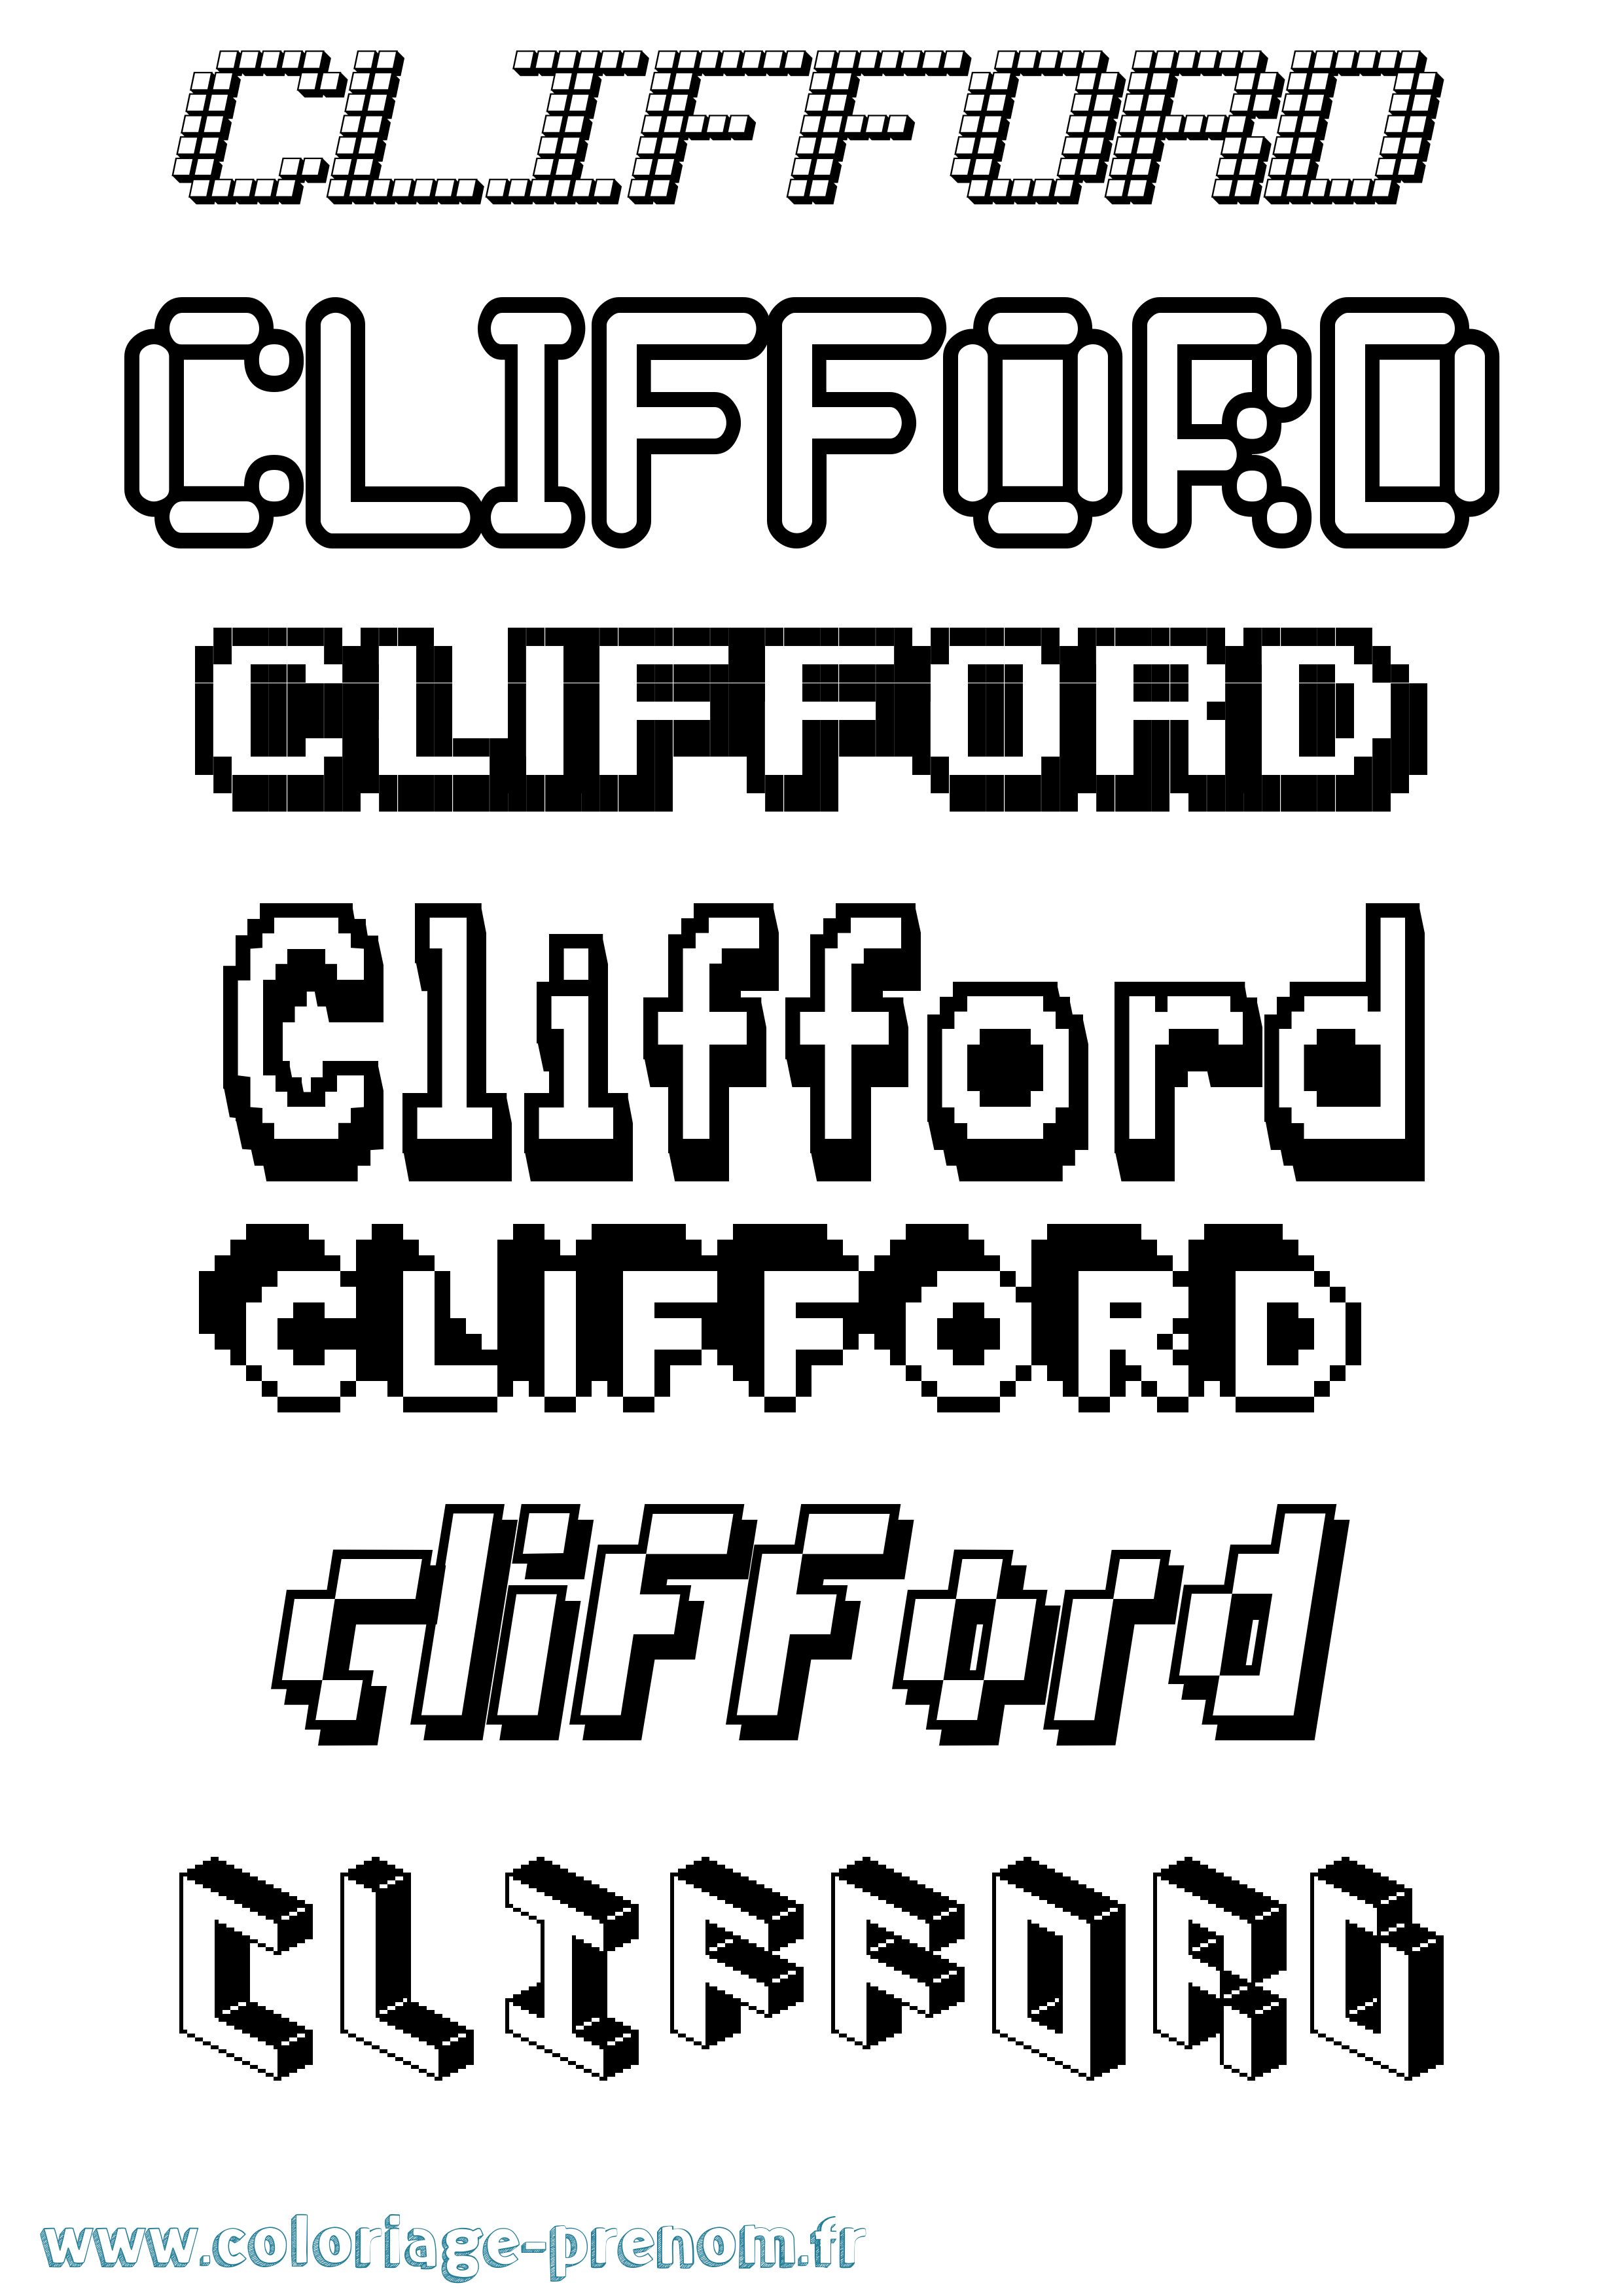 Coloriage prénom Clifford Pixel